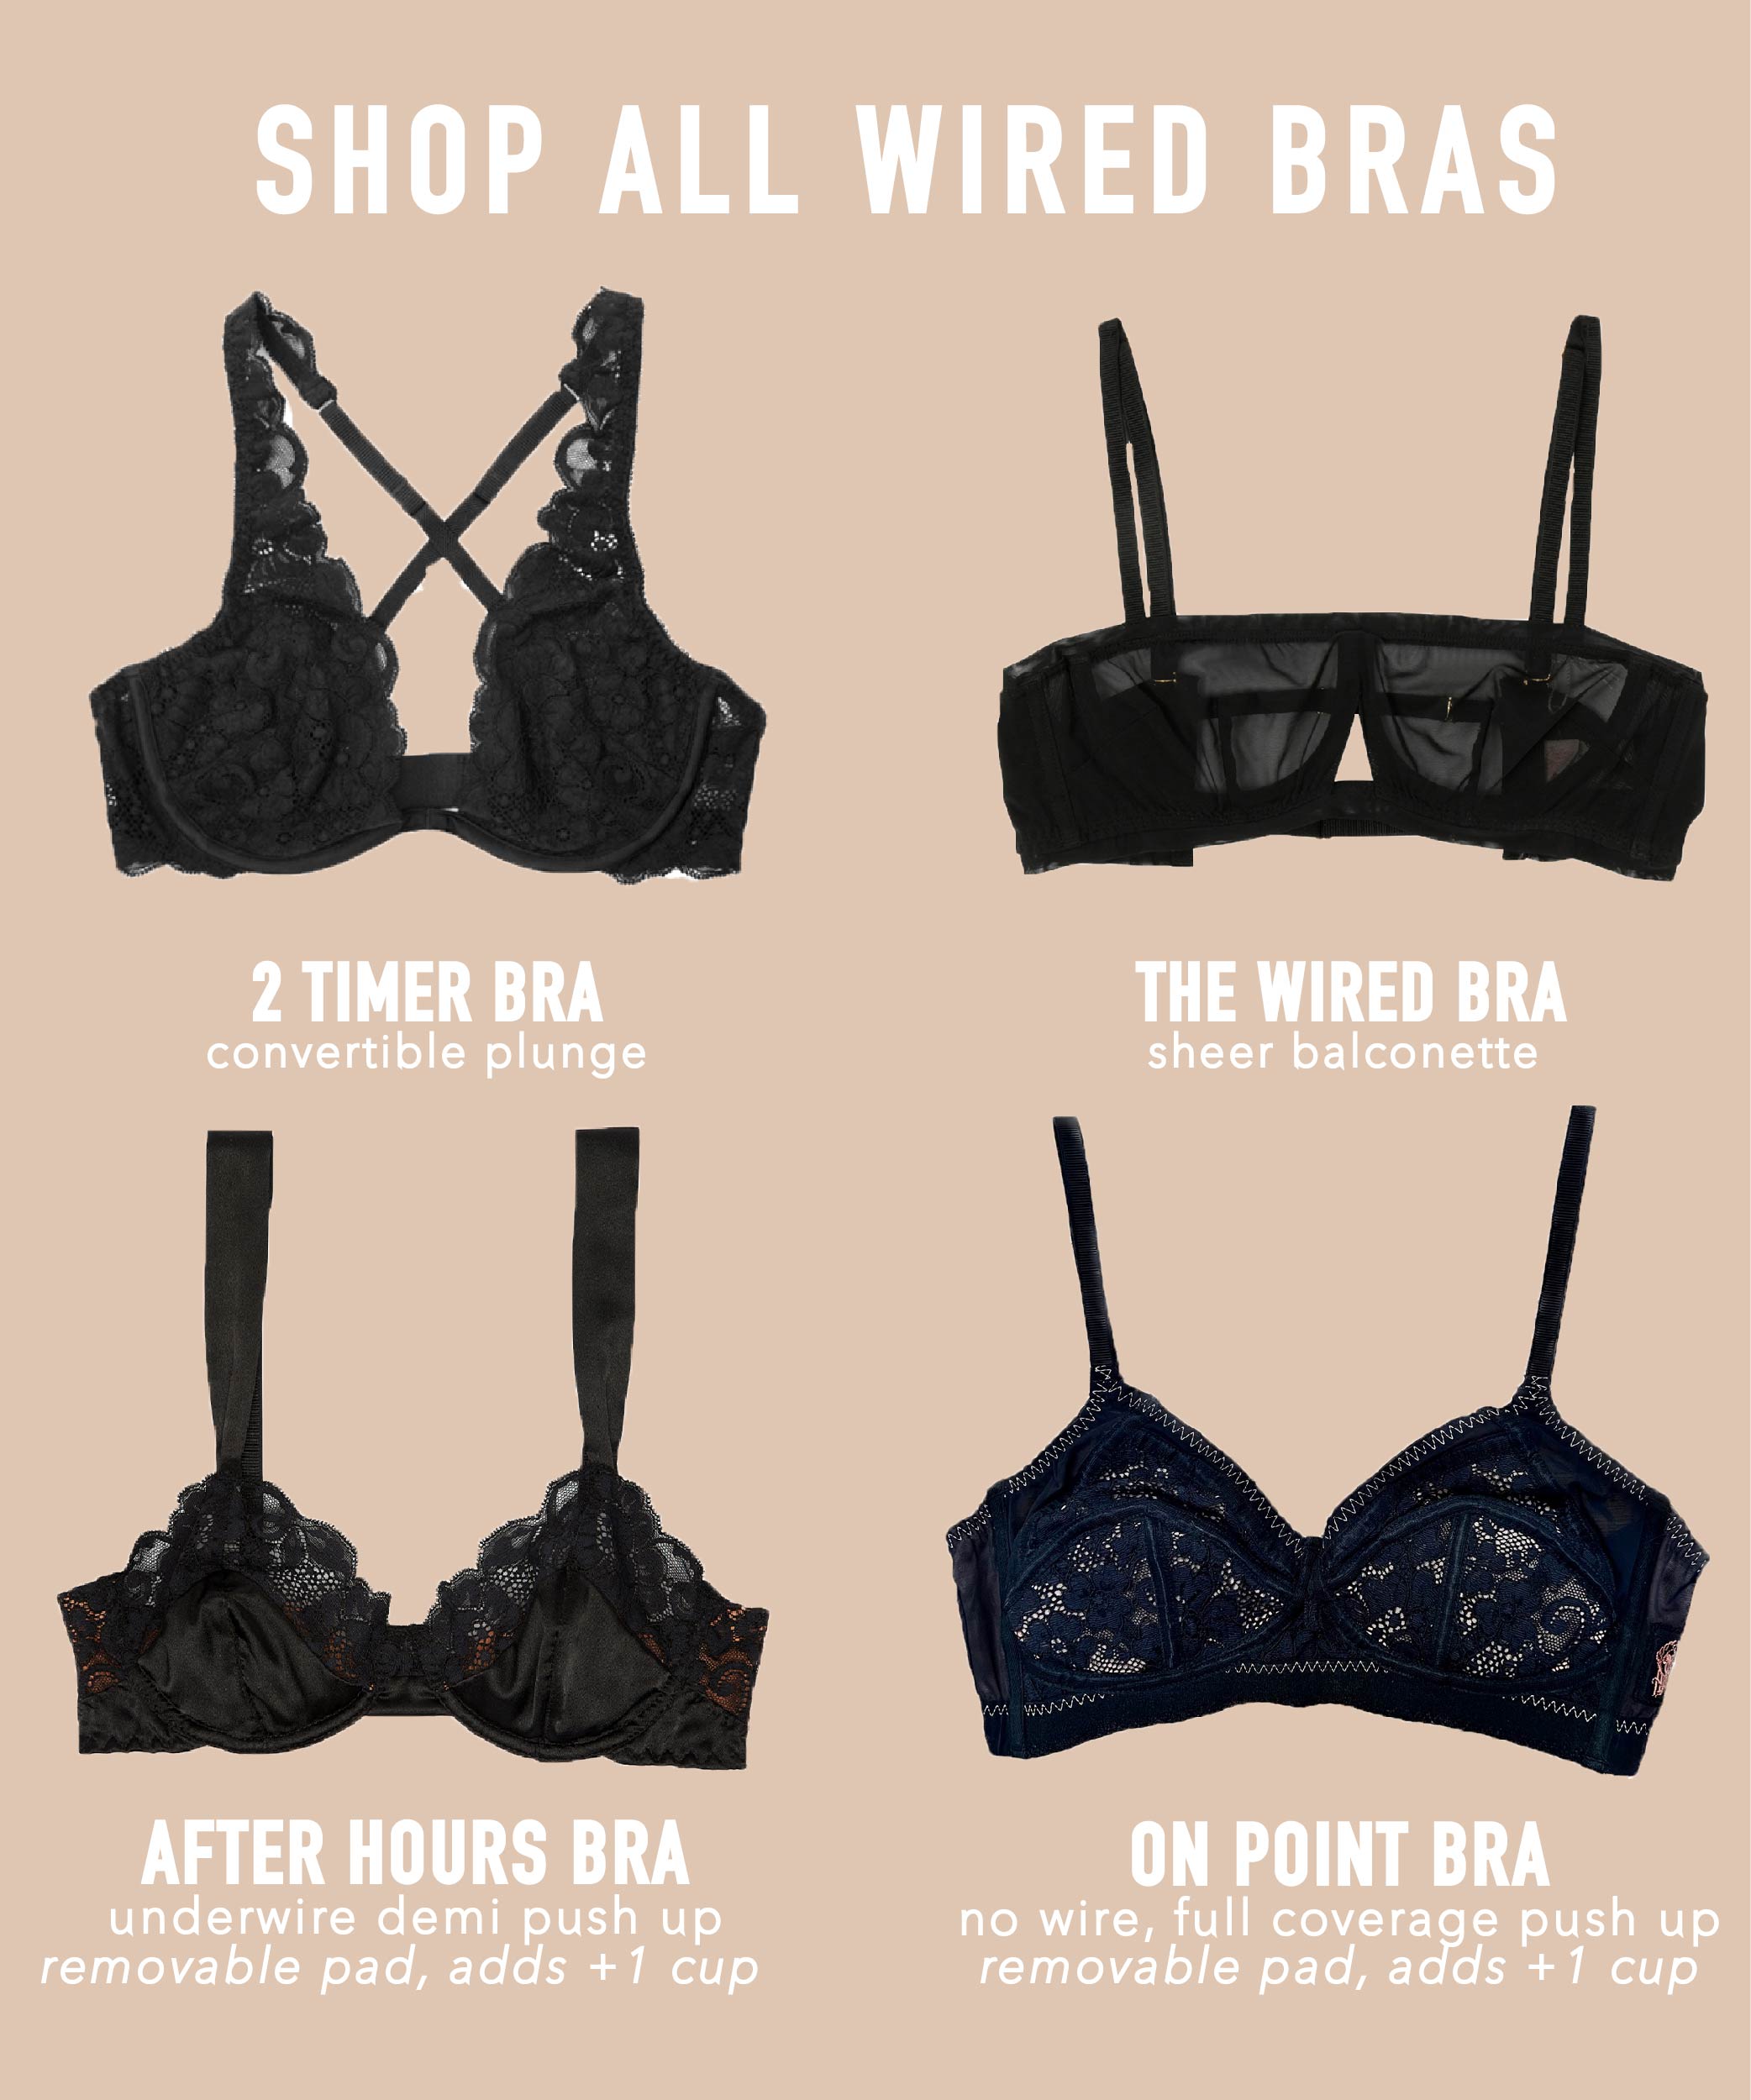 Wired bras